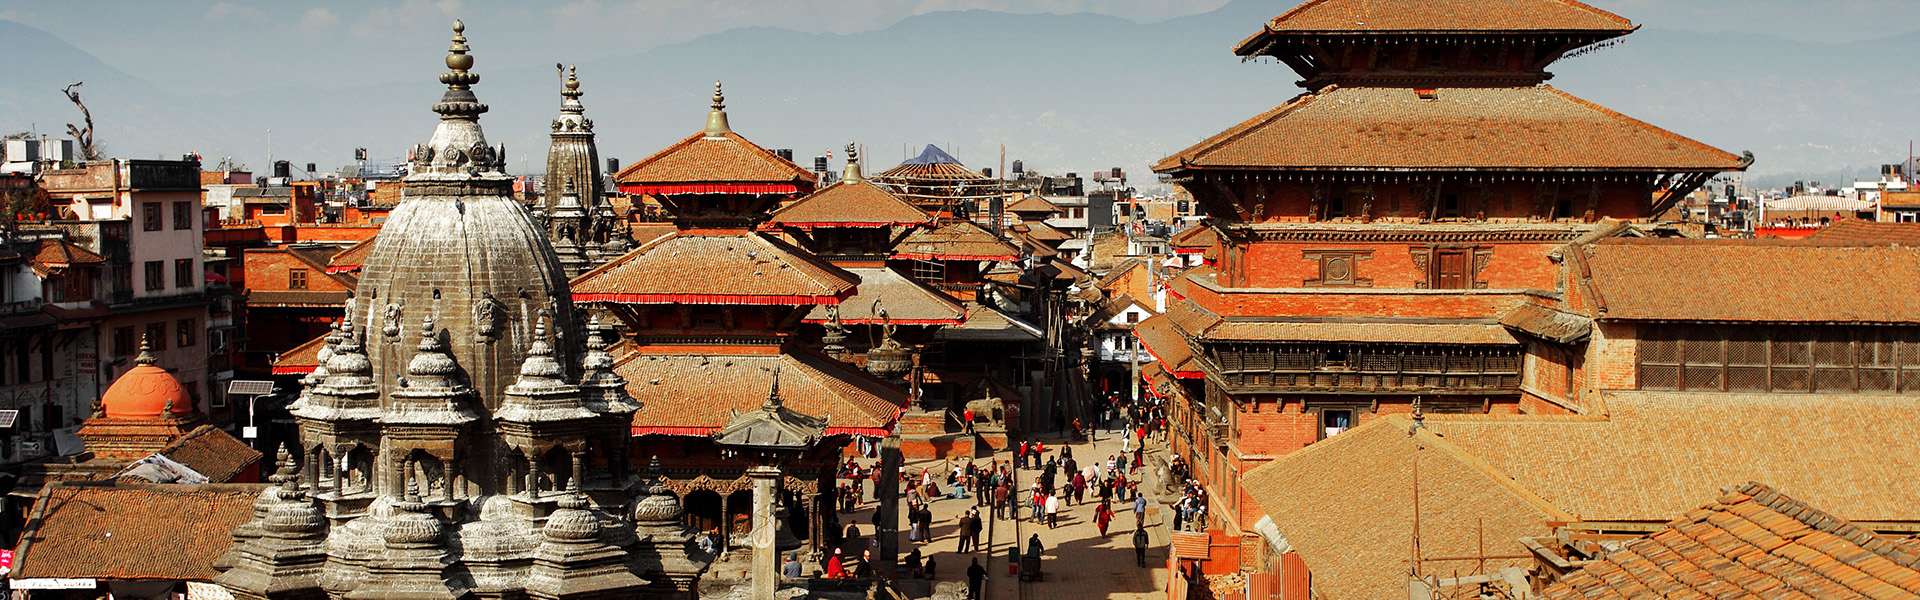 Kathmandu Durbar square Tour